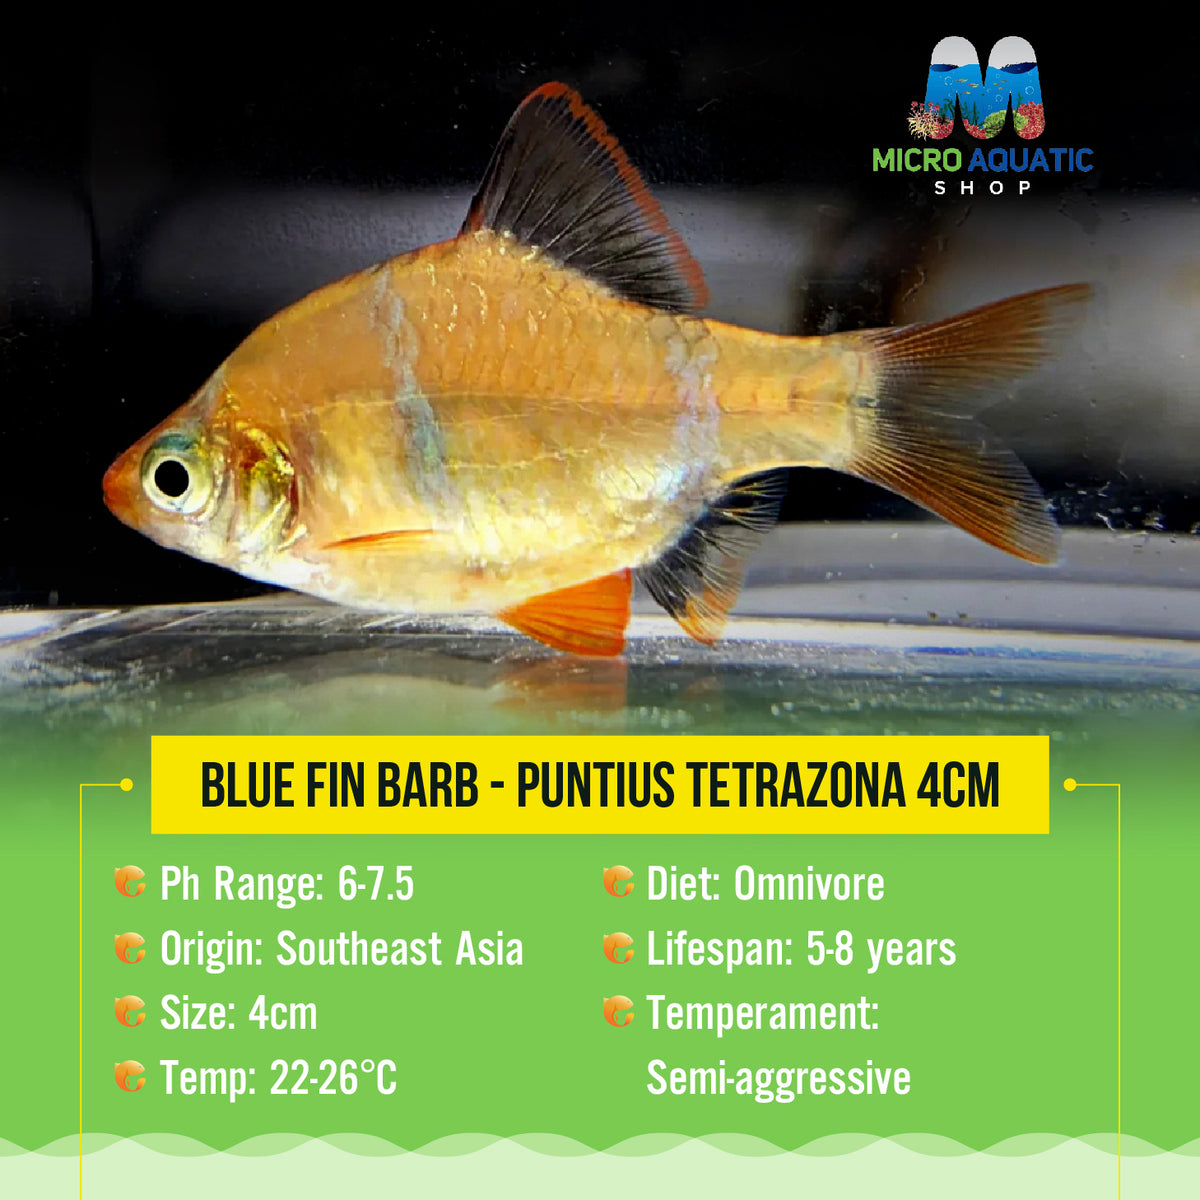 Blue Fin Barb - Puntius tetrazona 4cm